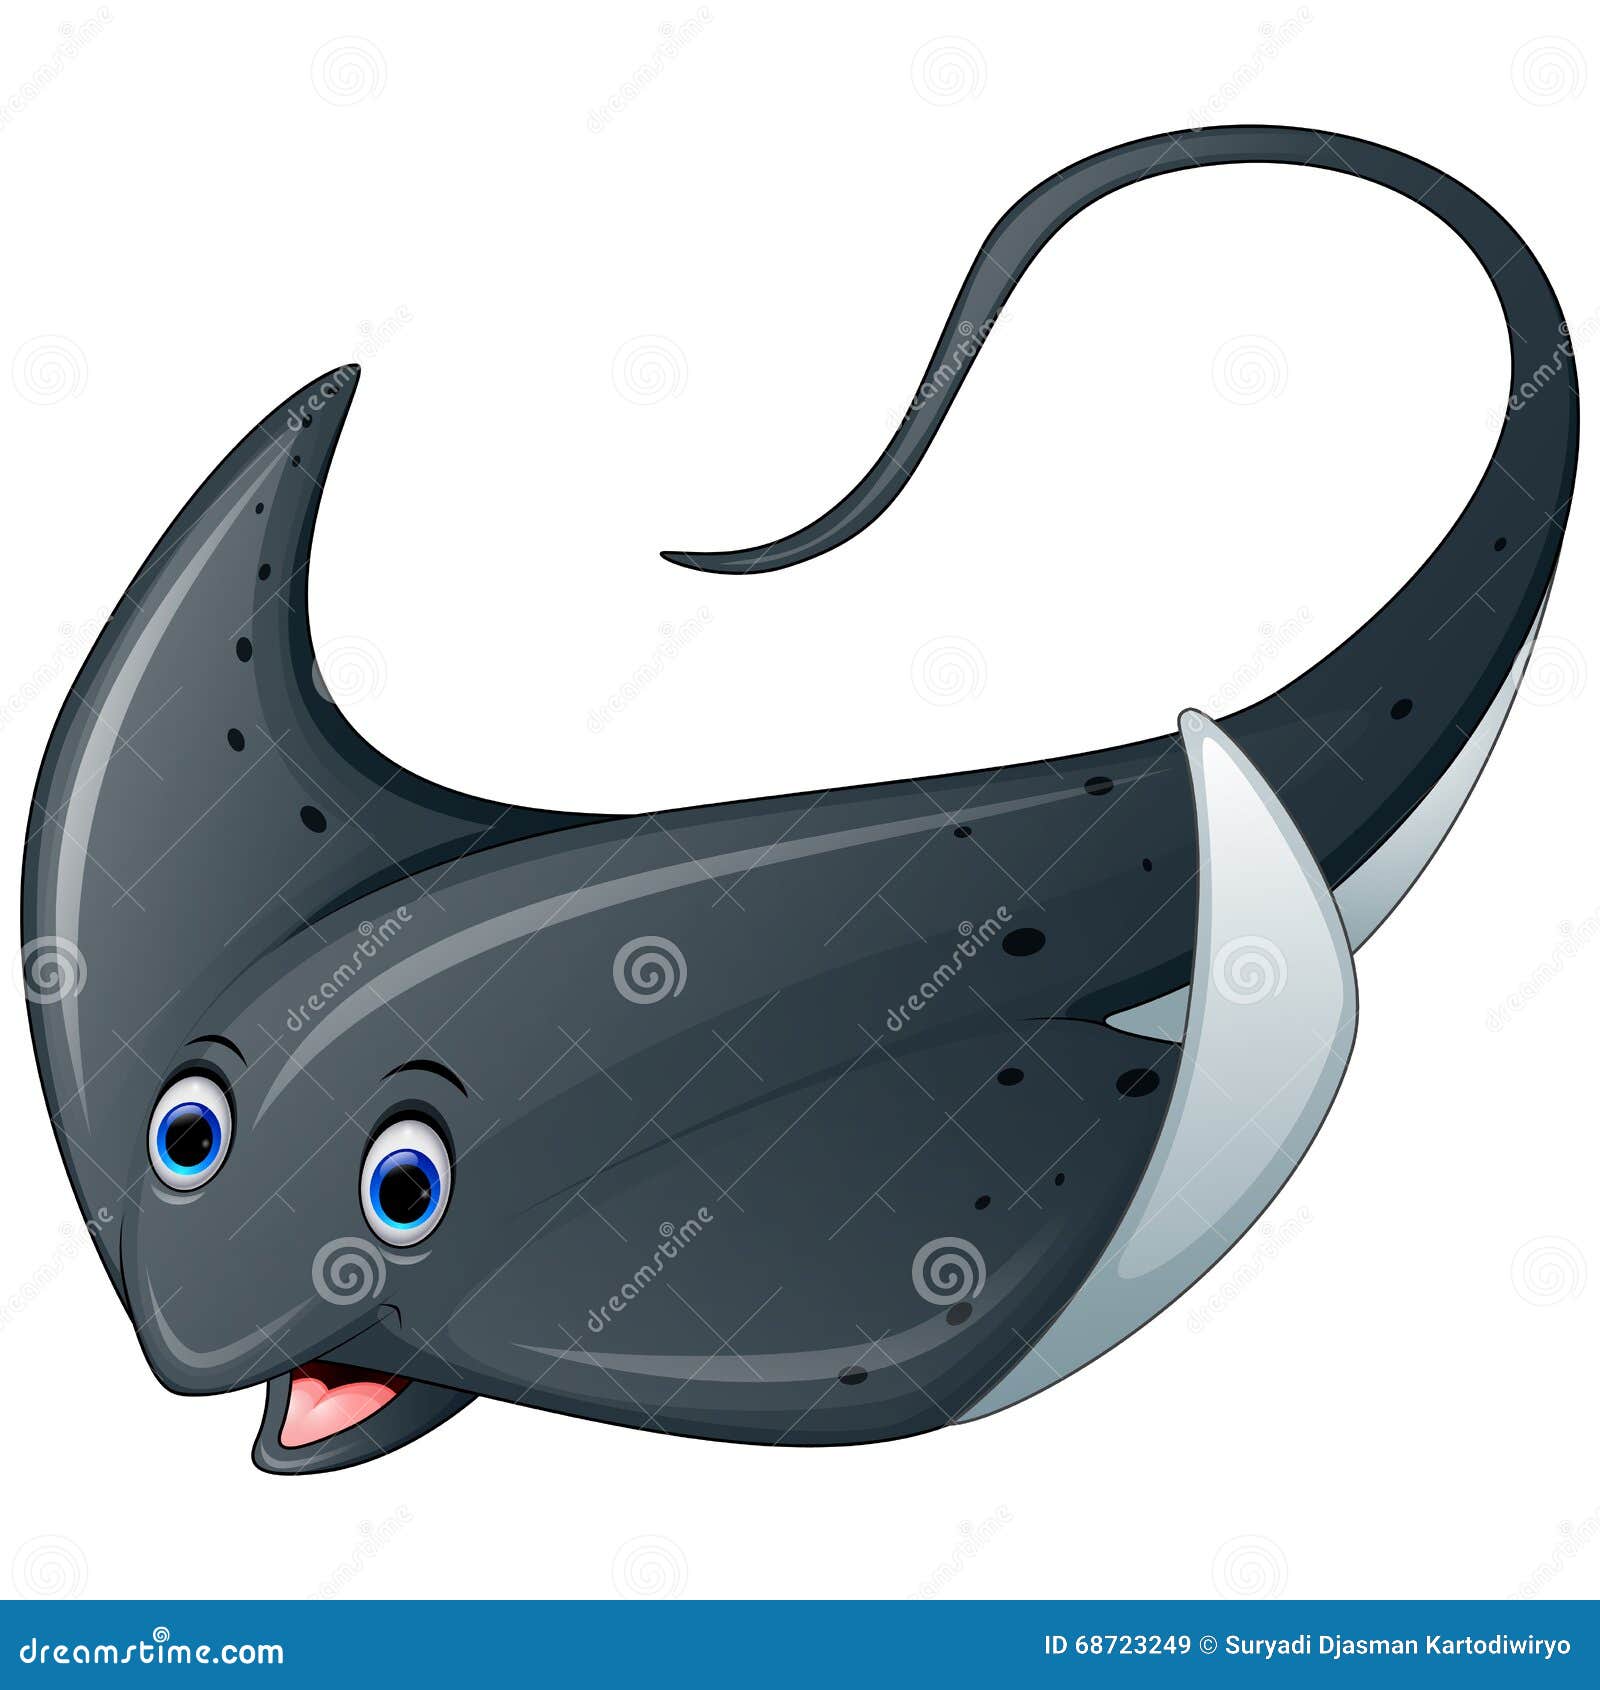 Cartoon Marine Stingray Fish Stock Vector - Image: 68723249